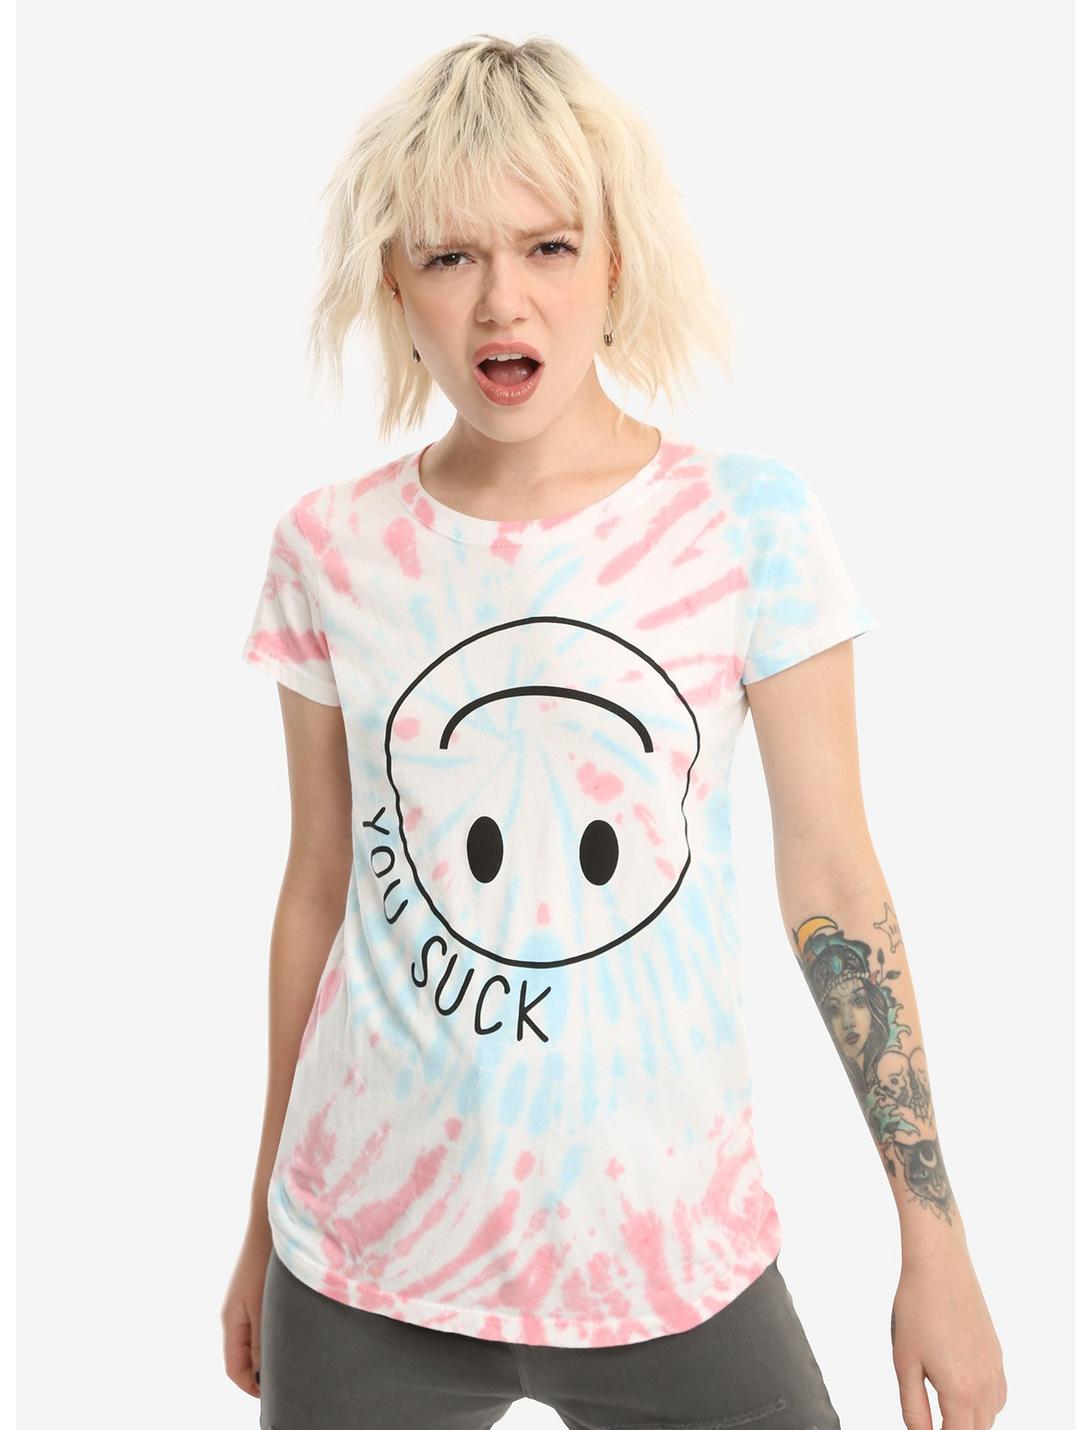 You Suck Smiley Face Tie Dye Girls T-Shirt | Hot Topic